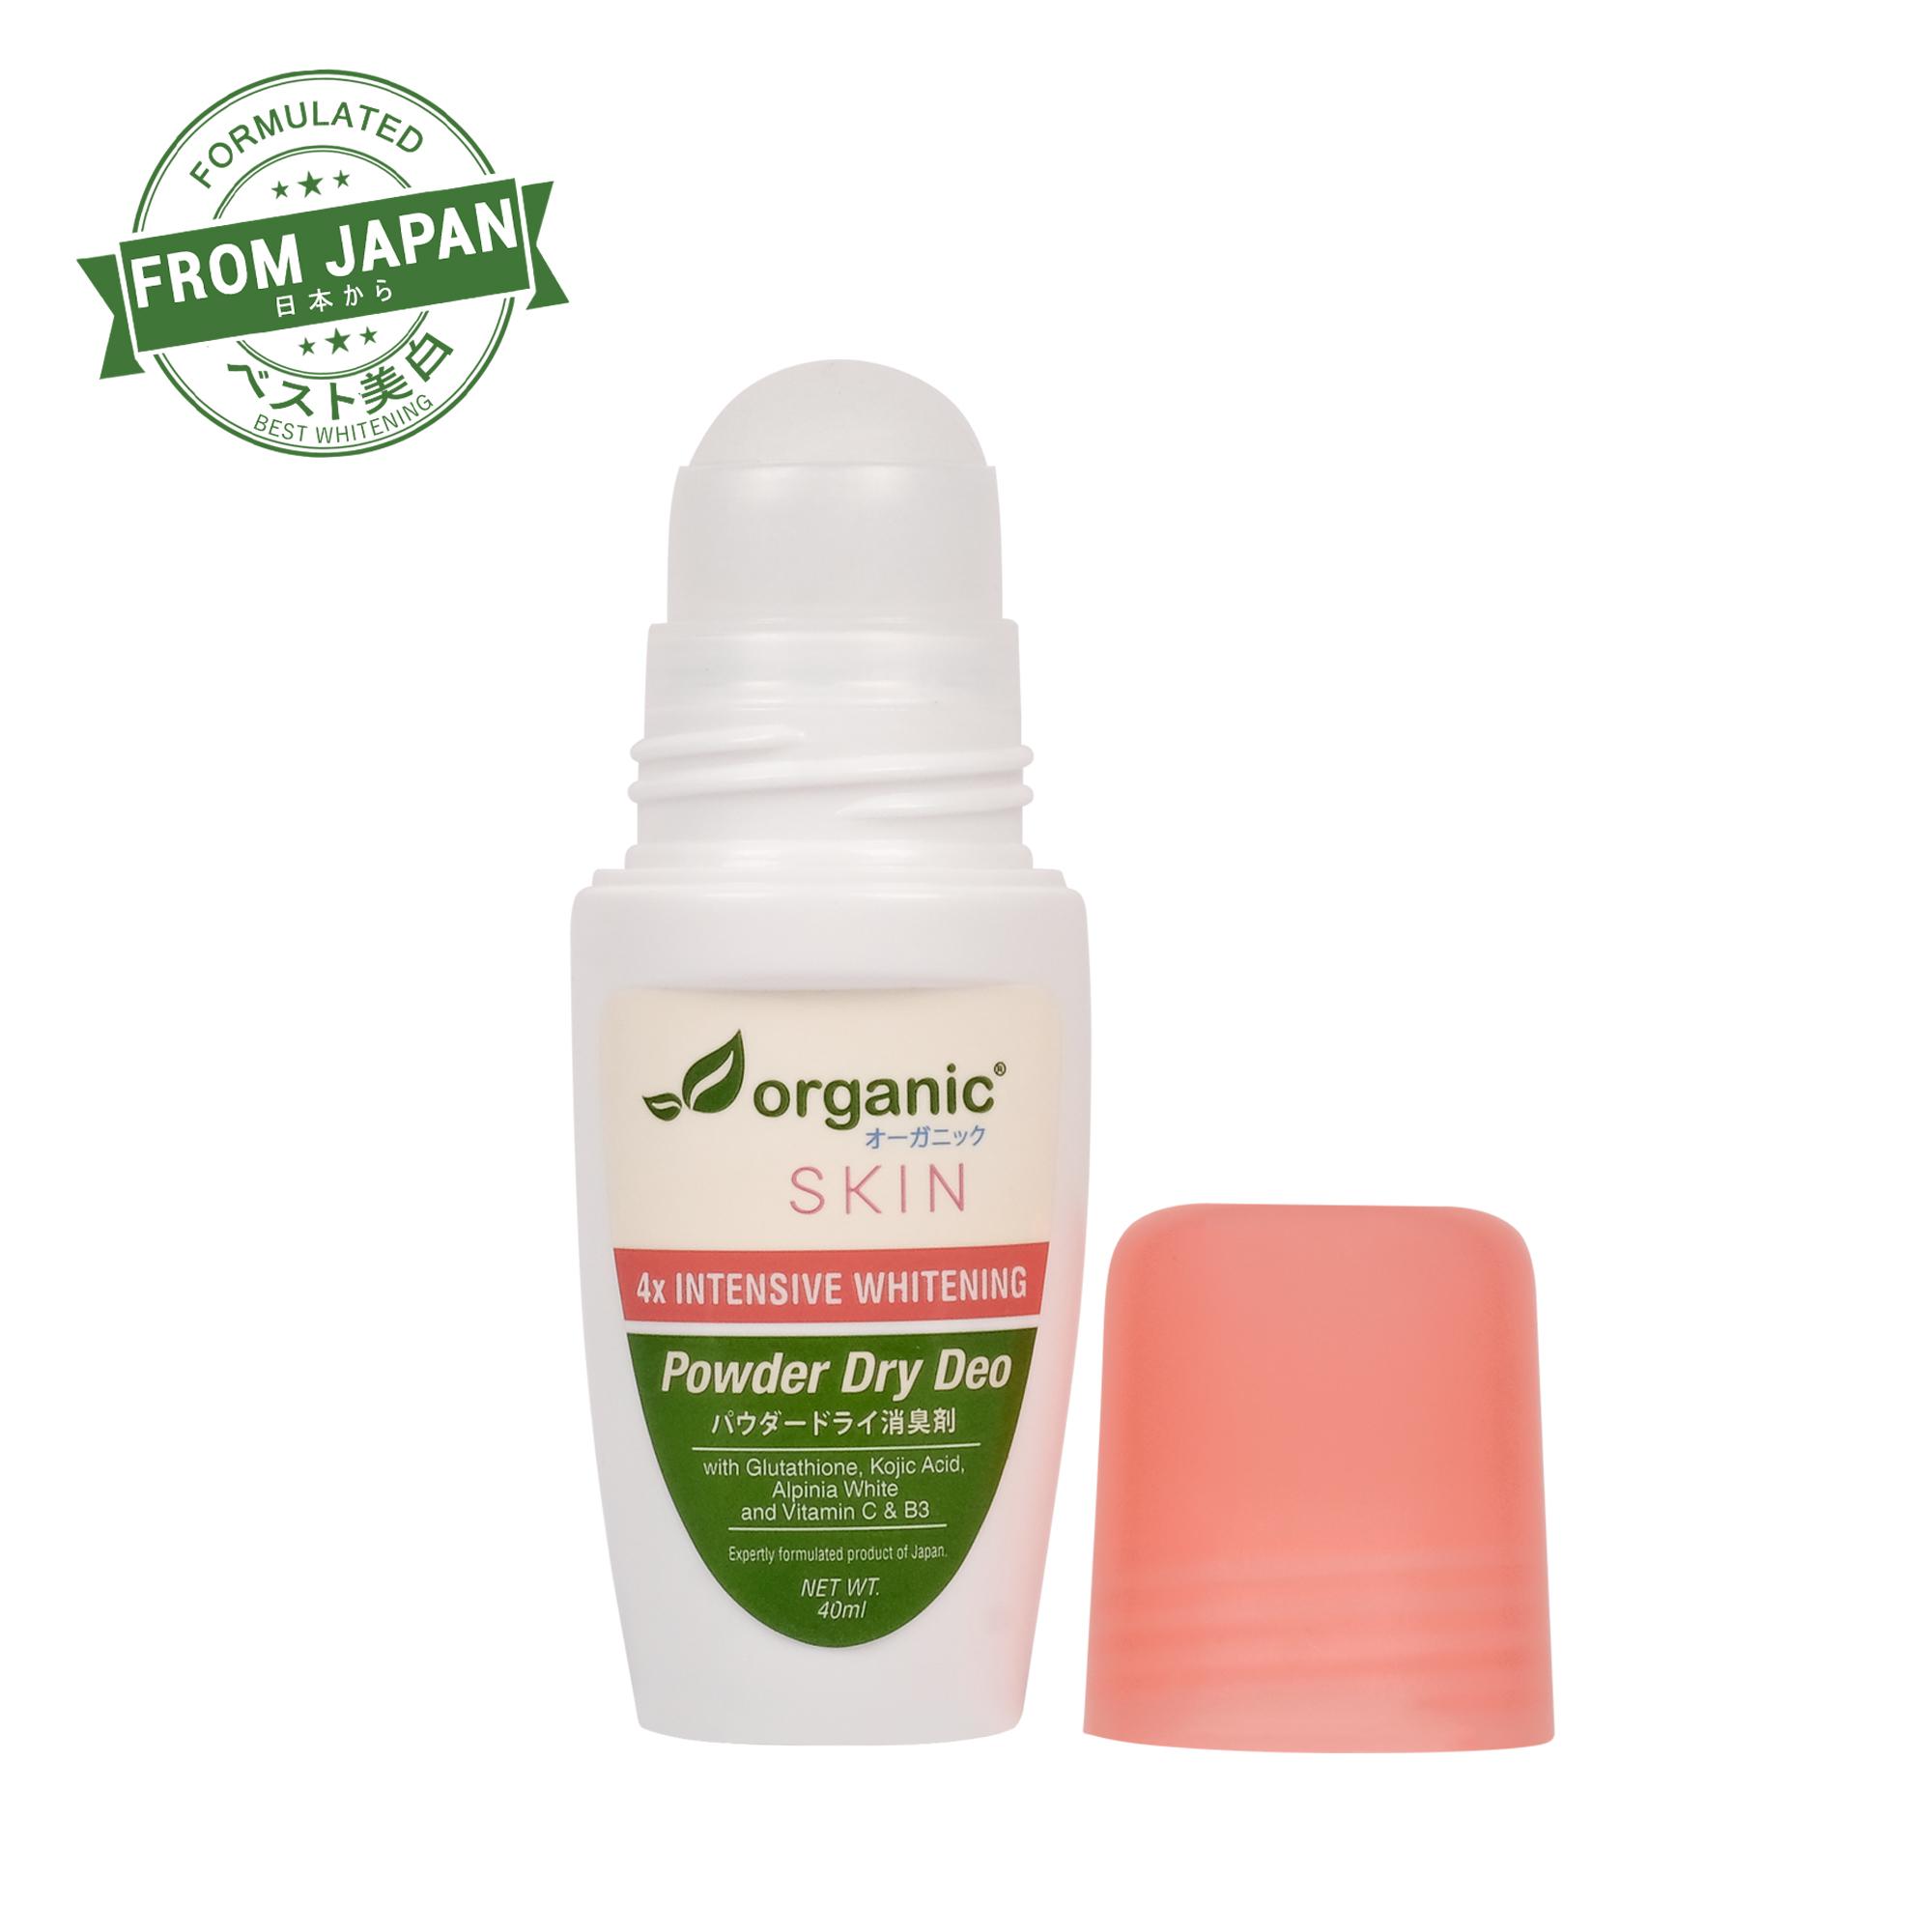 Organic Skin Japan 4x Intensive Whitening Powder Dry Deodorant 40ml